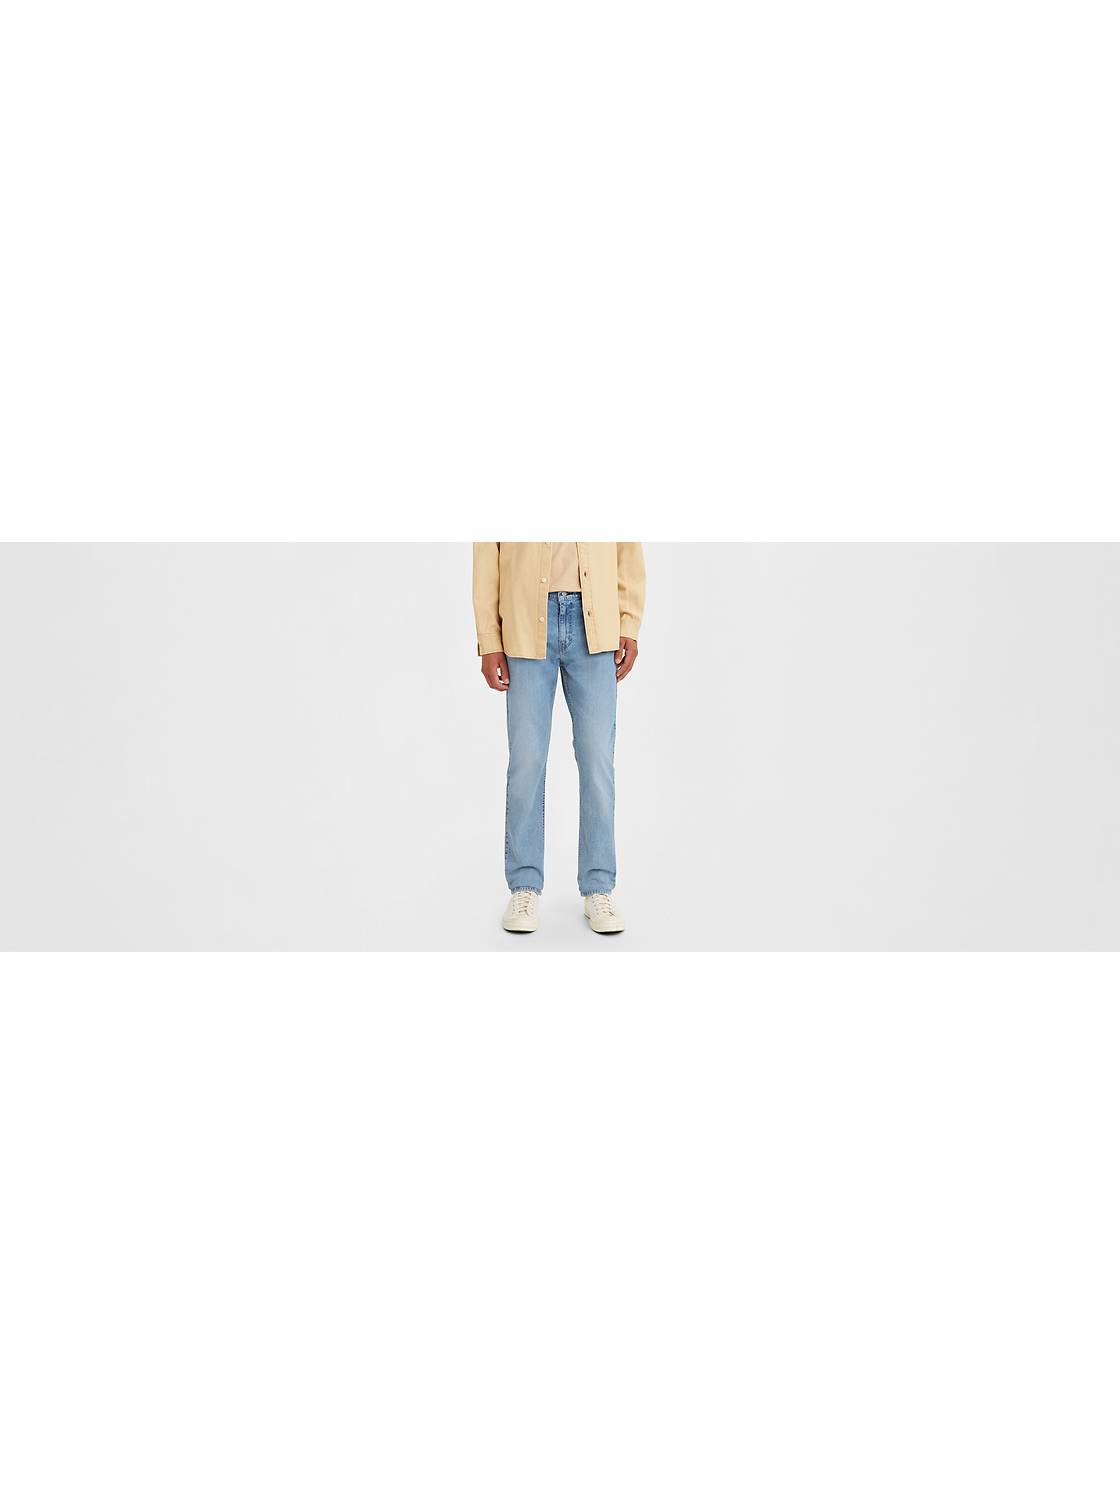 Jeans de Homem BLEND Chávena Torcida Multiflex Azul (34x32